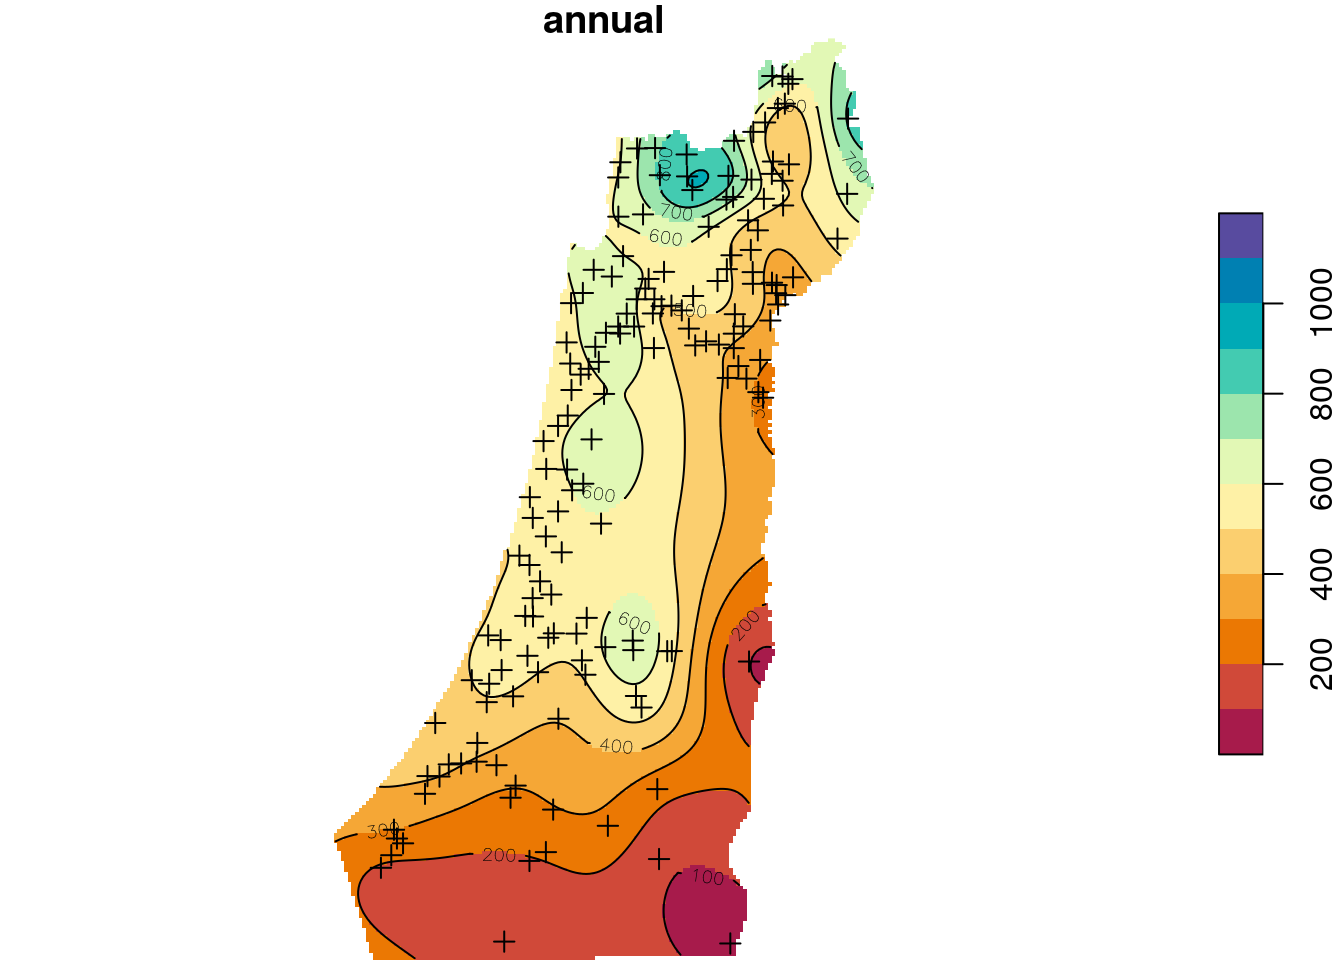 Predicted annual rainfall using Ordinary Kriging